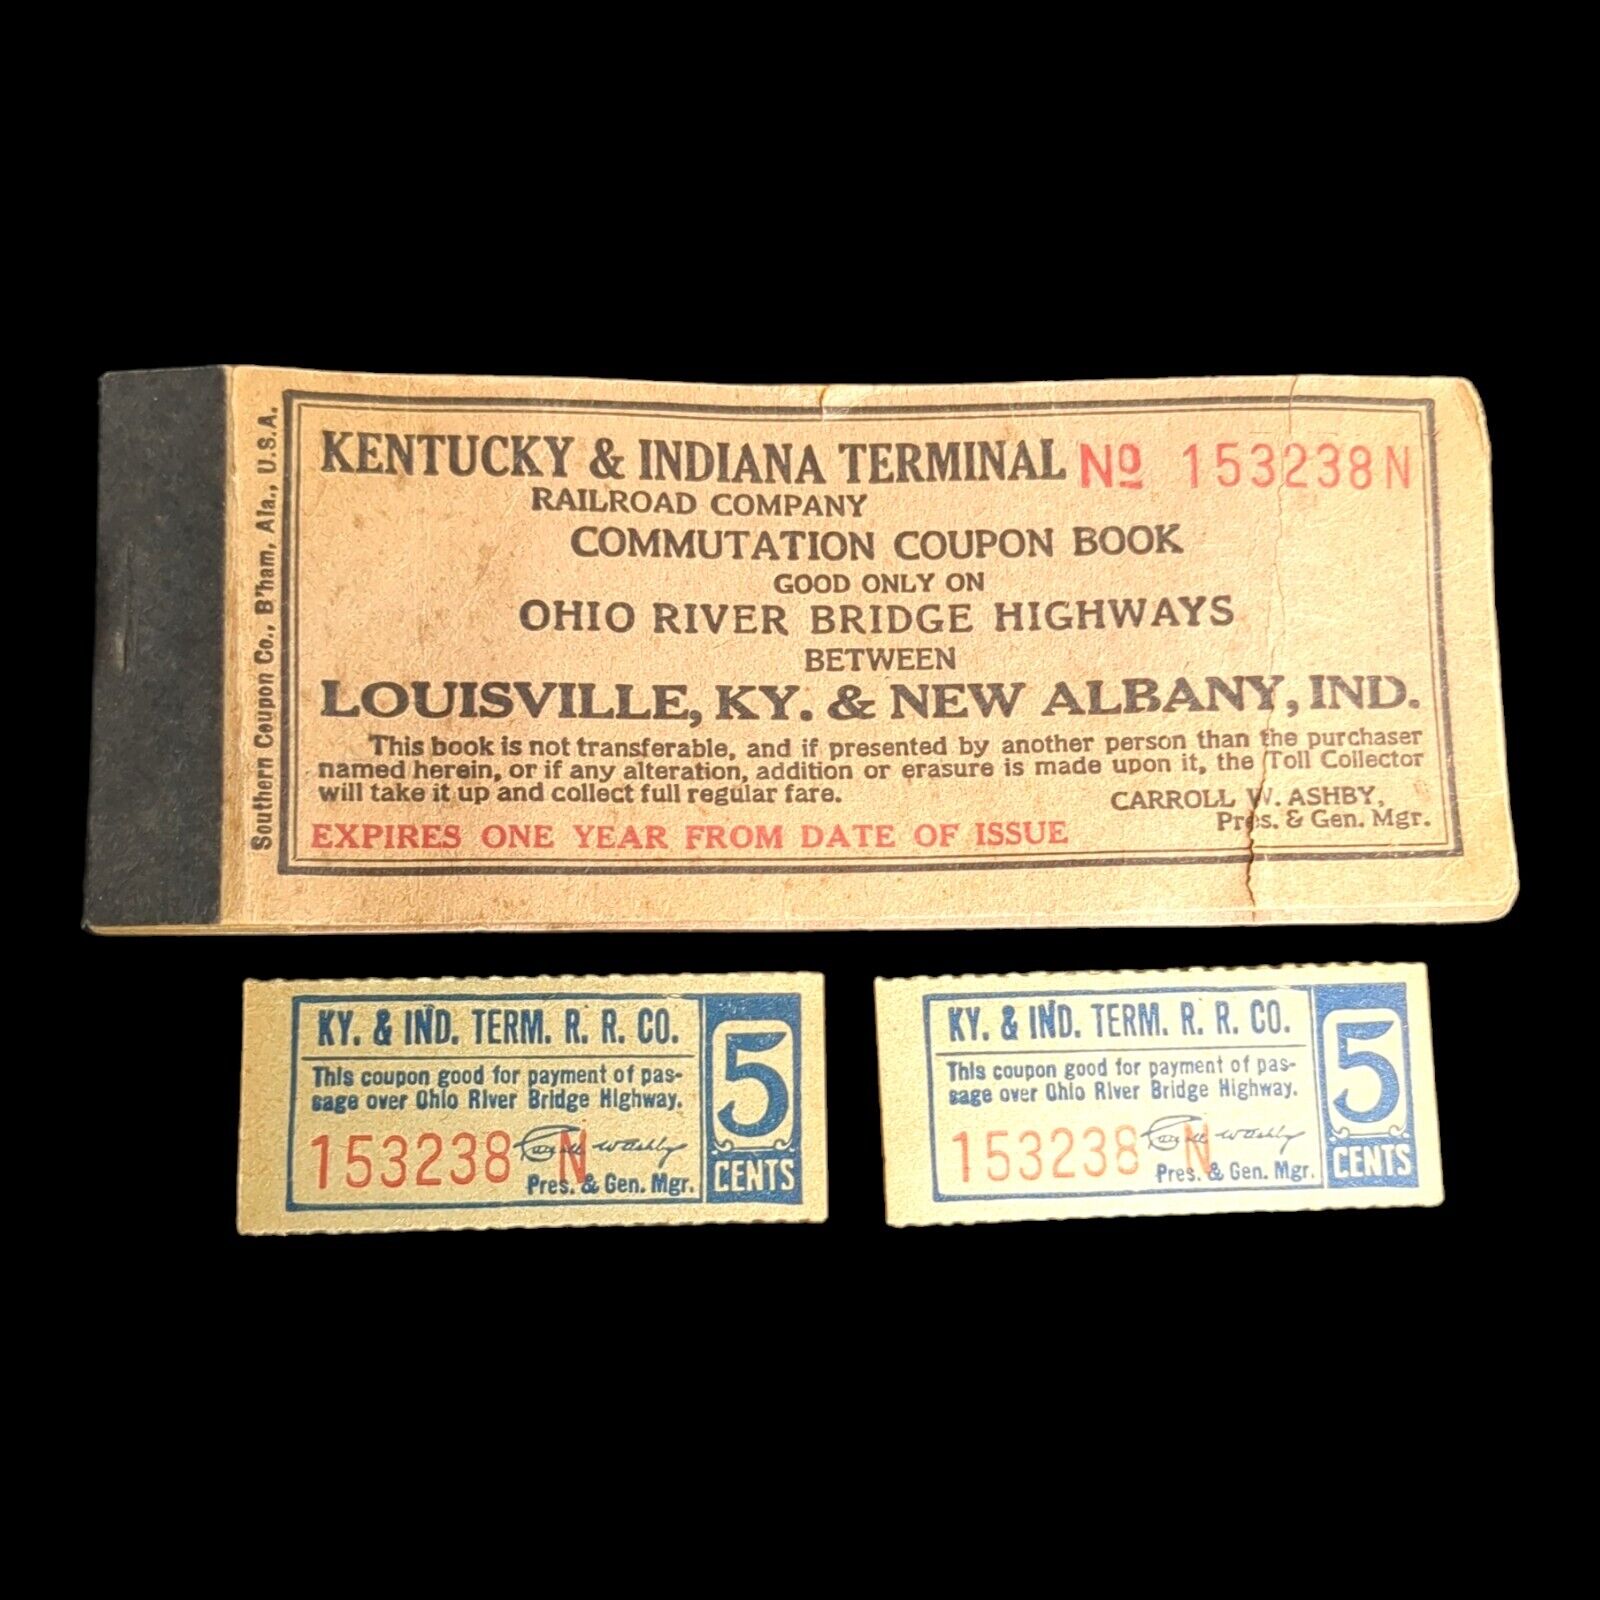 Kentucky & Indiana Terminal Railroad Company Commutation Coupon Book + 2 Tickets